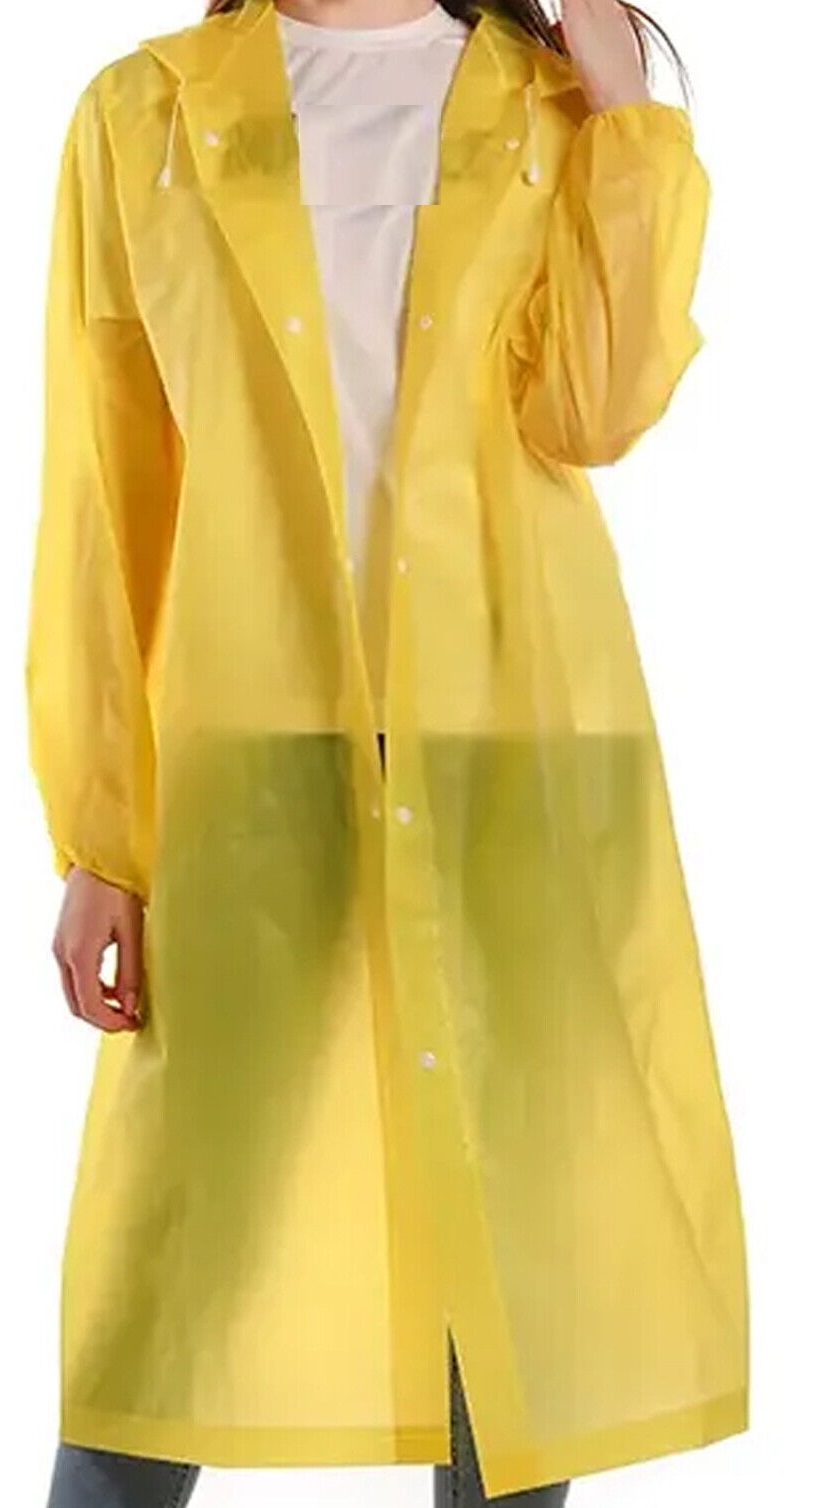 Yellow Medium Travel Raincoat Rain Jacket